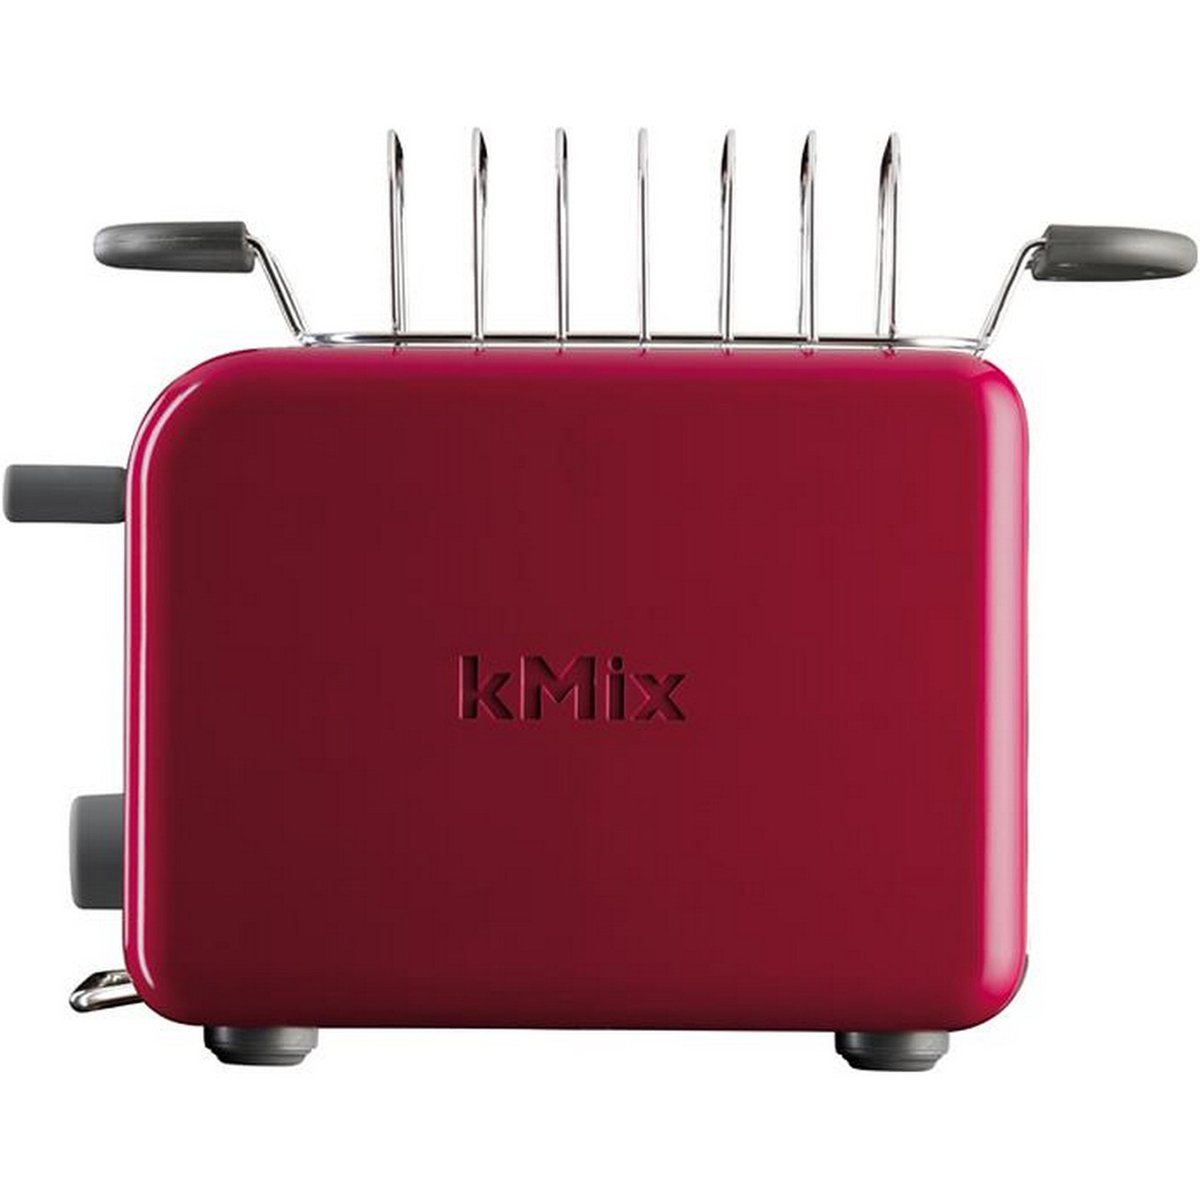 Kenwood KMix Toaster TTM021 2Slice Assorted